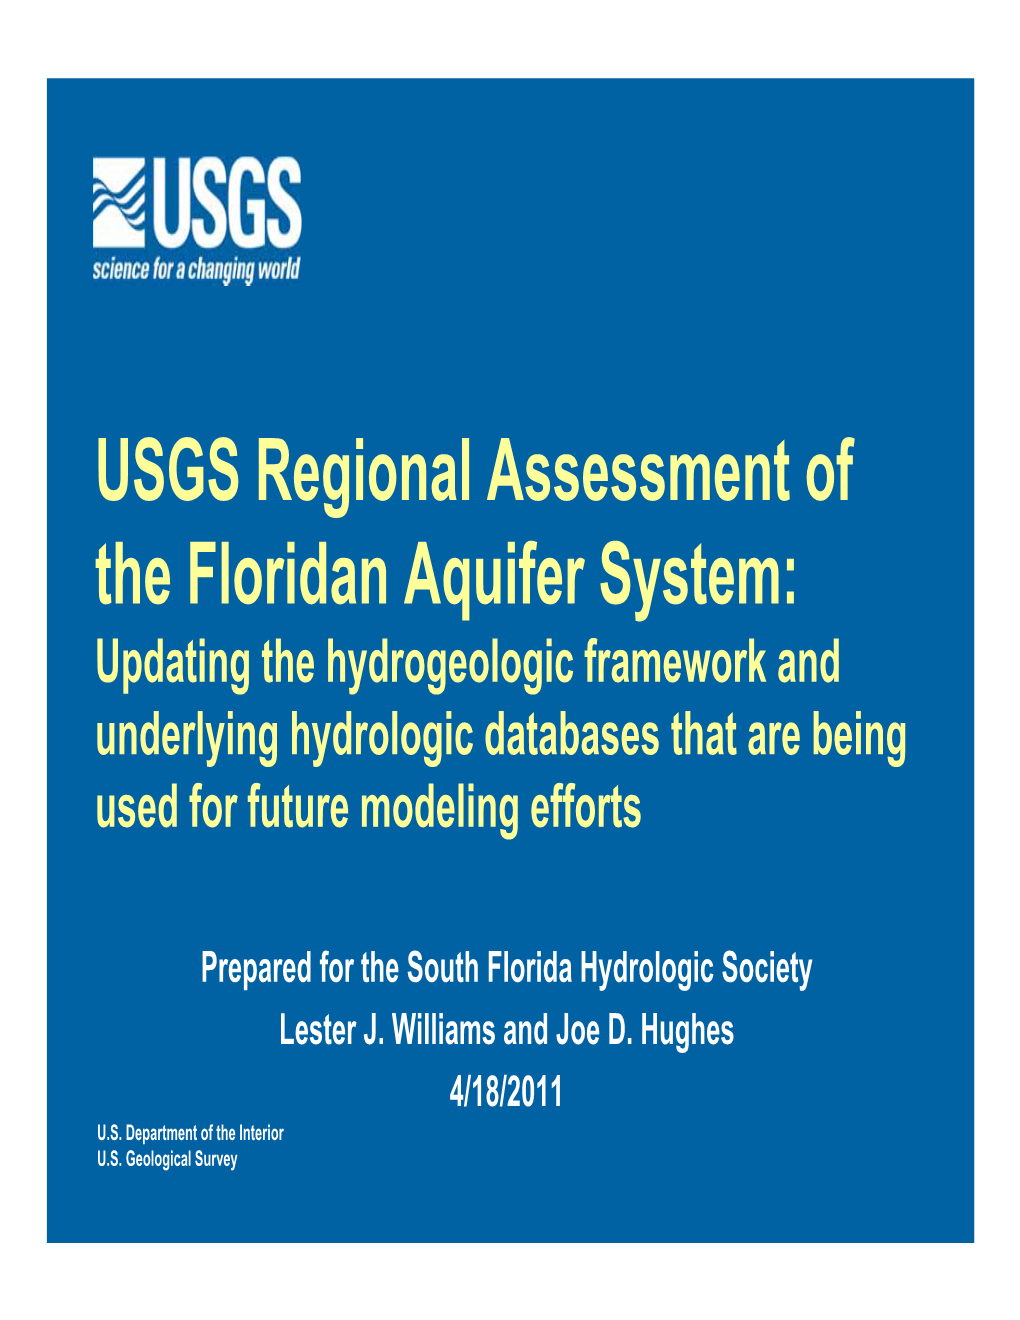 USGS Regional Assessment of the Floridan Aquifer System